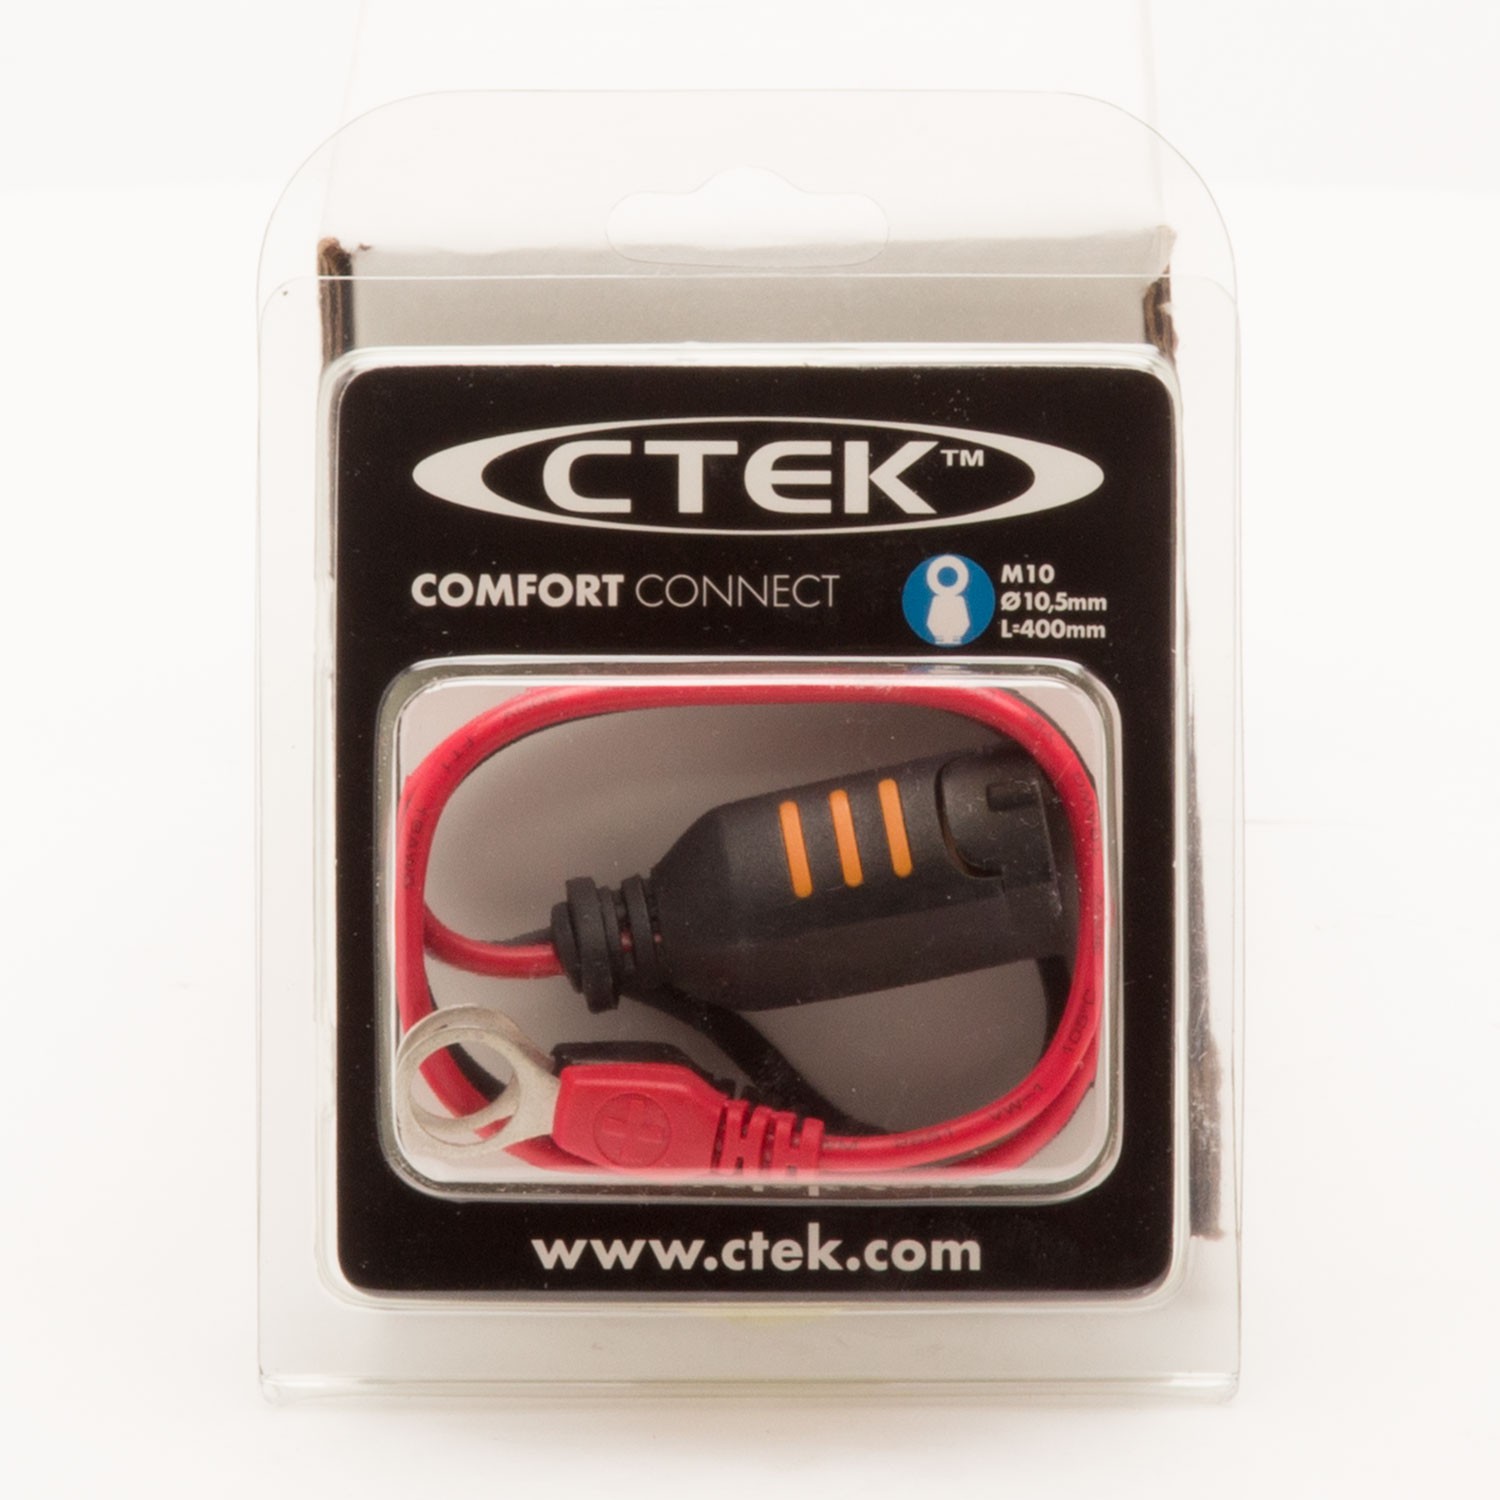 CTEK Comfort Connect M10 For Side Post Batteries Ctek Chargers 56-329 